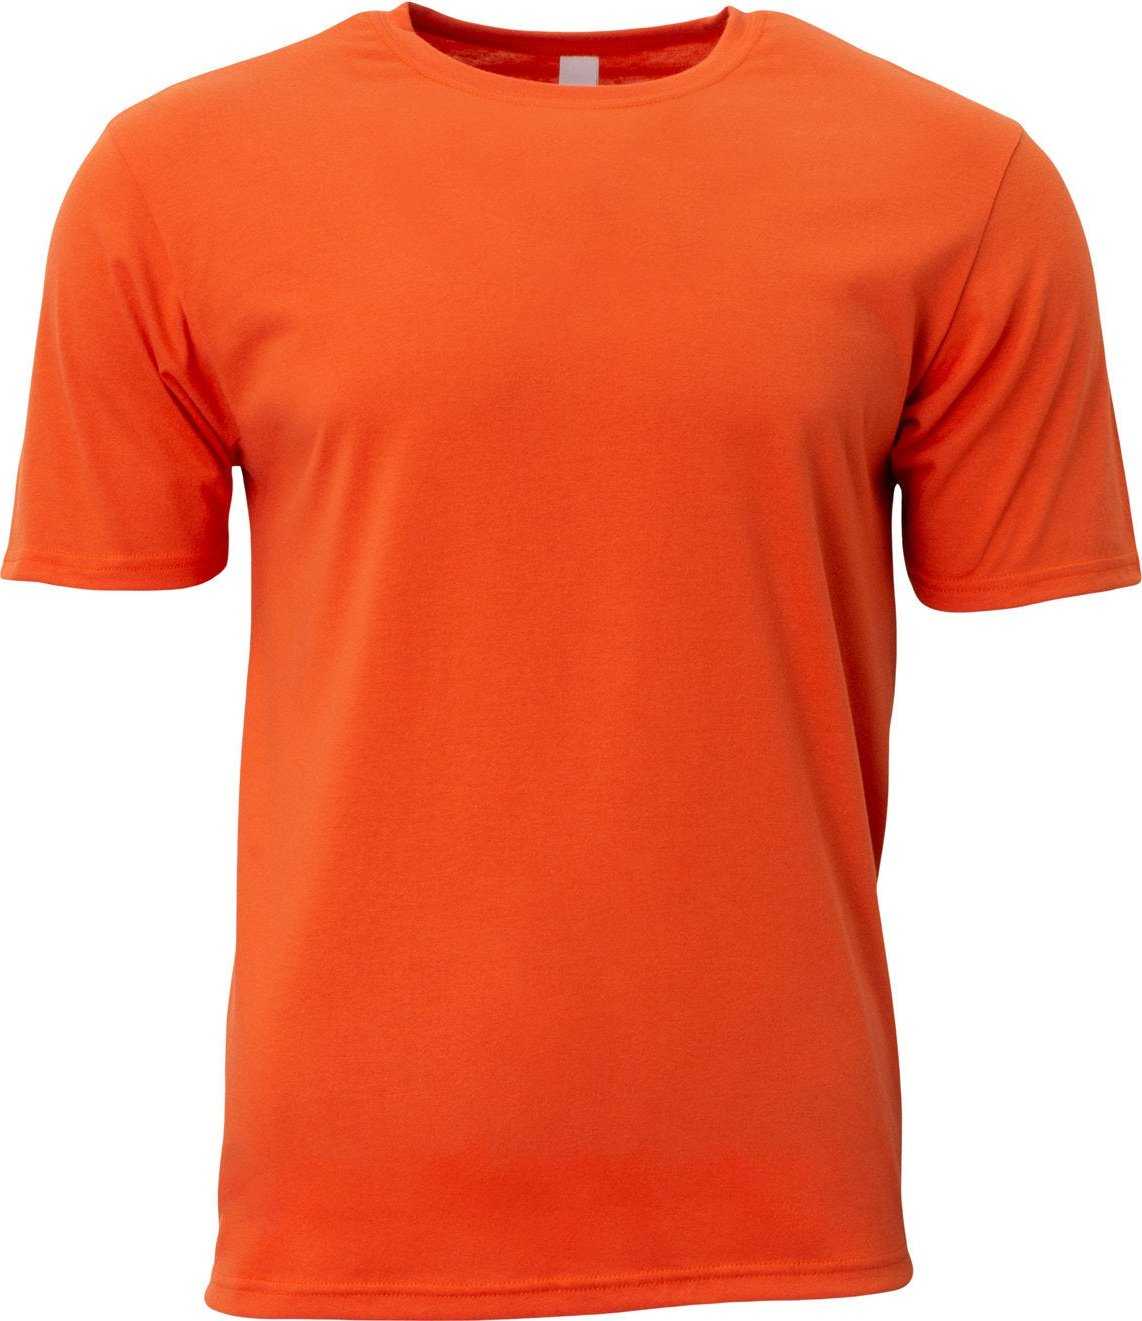 A4 N3013 Adult Softek T-Shirt - ATHLETIC ORANGE - HIT a Double - 1